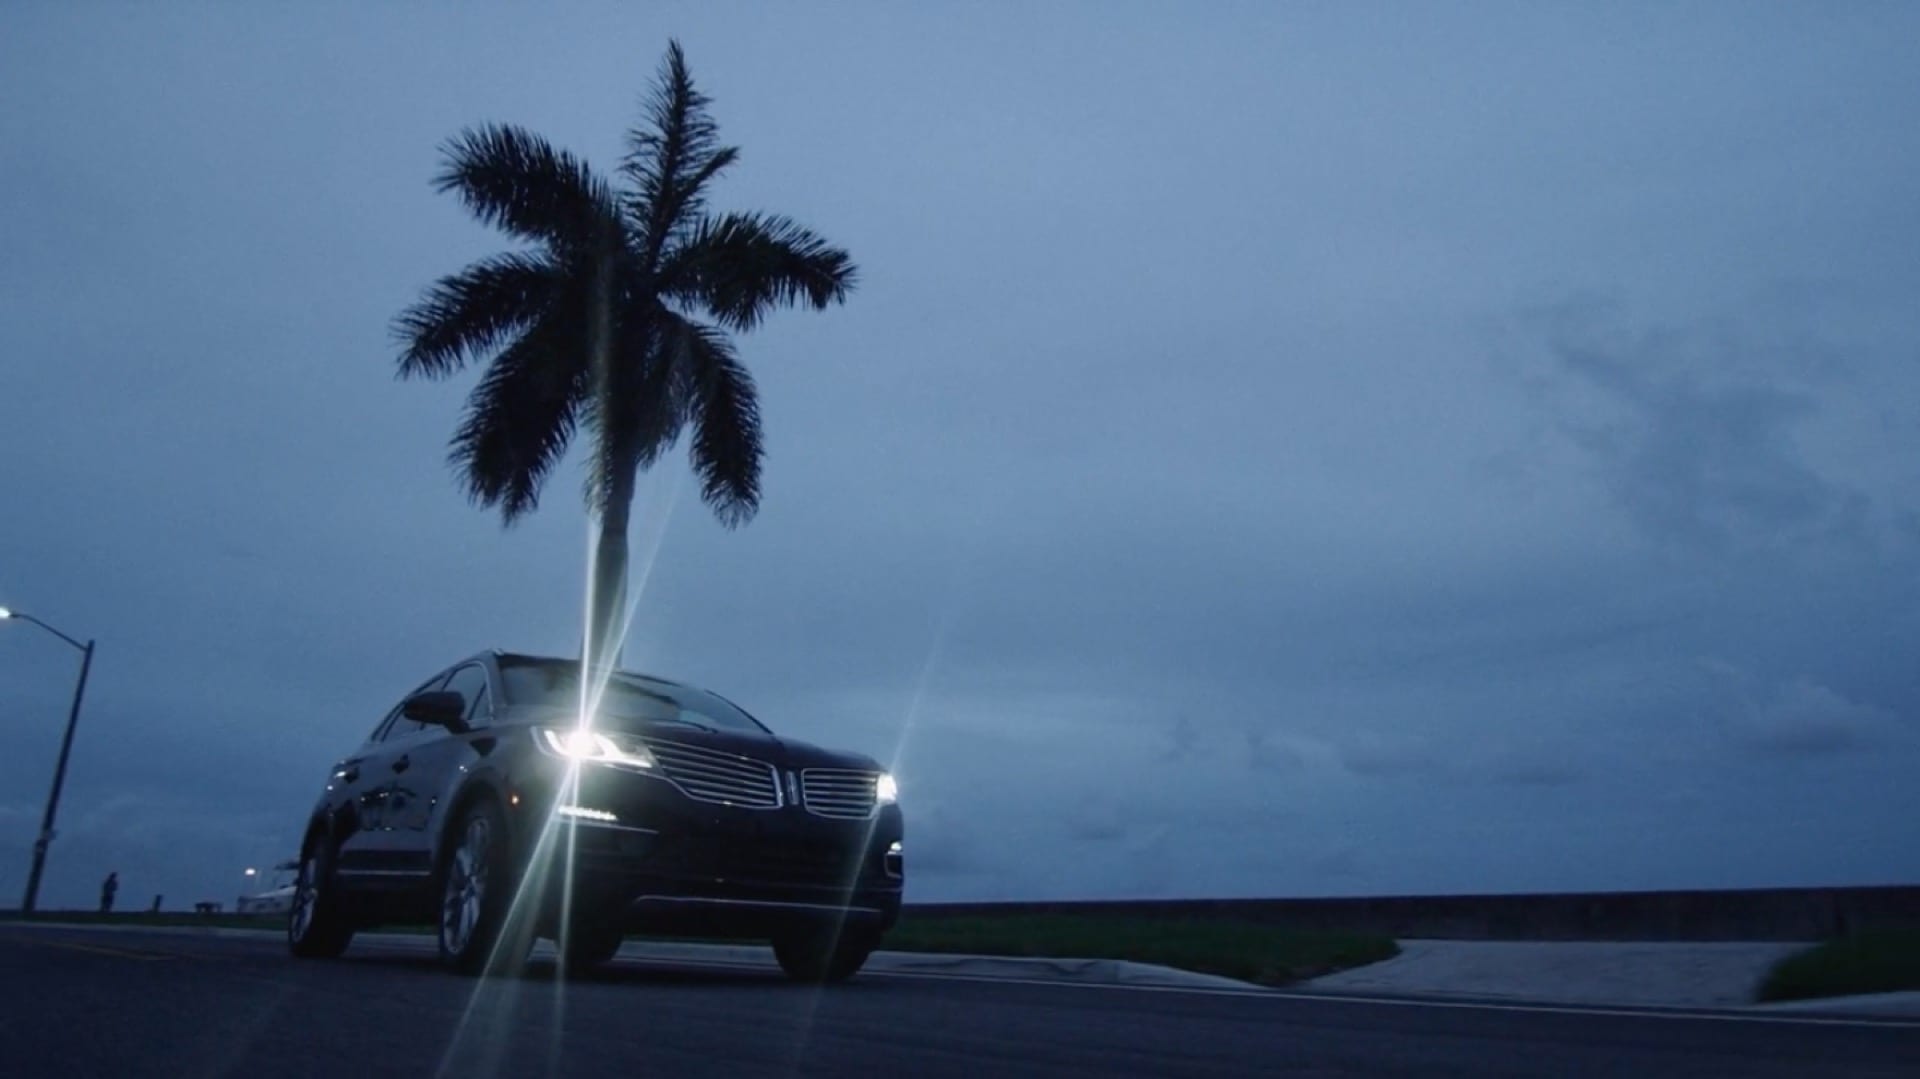 IU C&I Studio Portfolio Lincoln Cars MKC & MKZ A Lincoln car on a Florida location by a palm tree at dusk